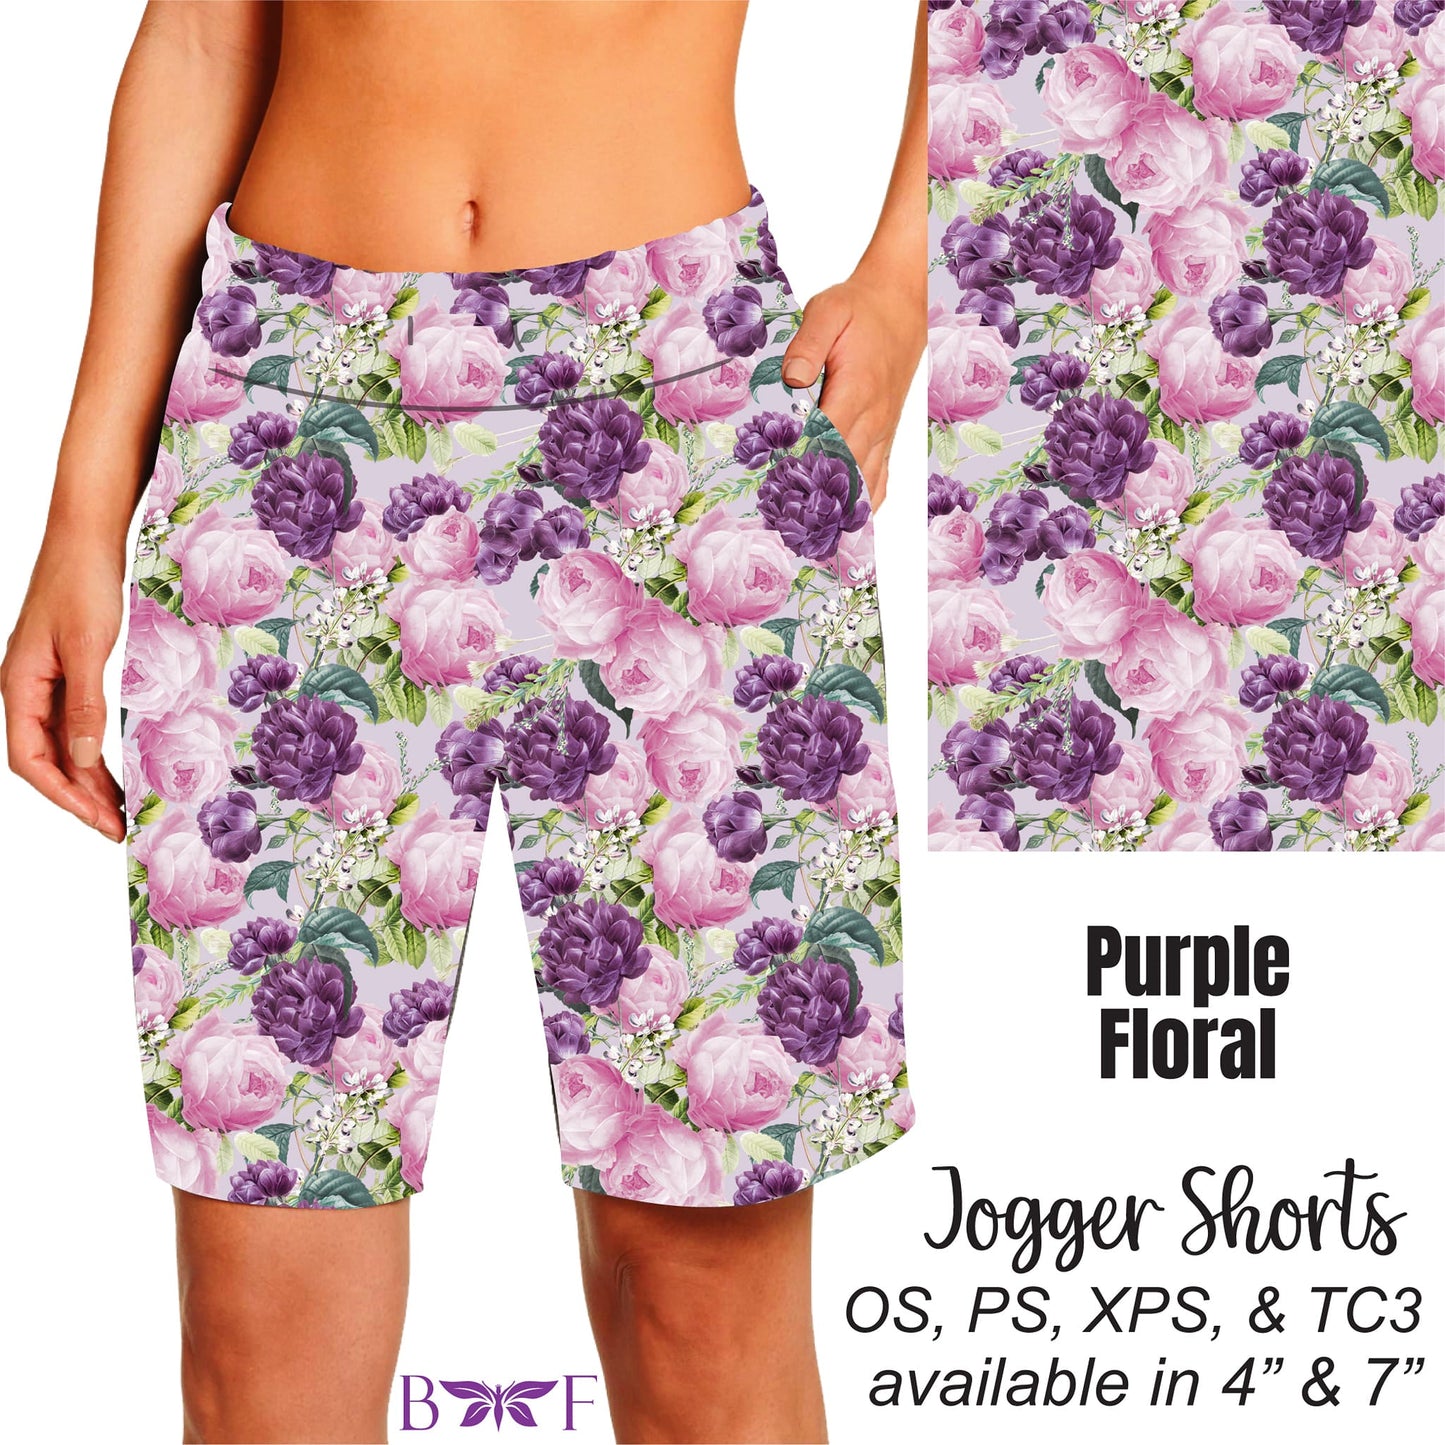 Purple Floral Leggings, Capris, and Biker Shorts